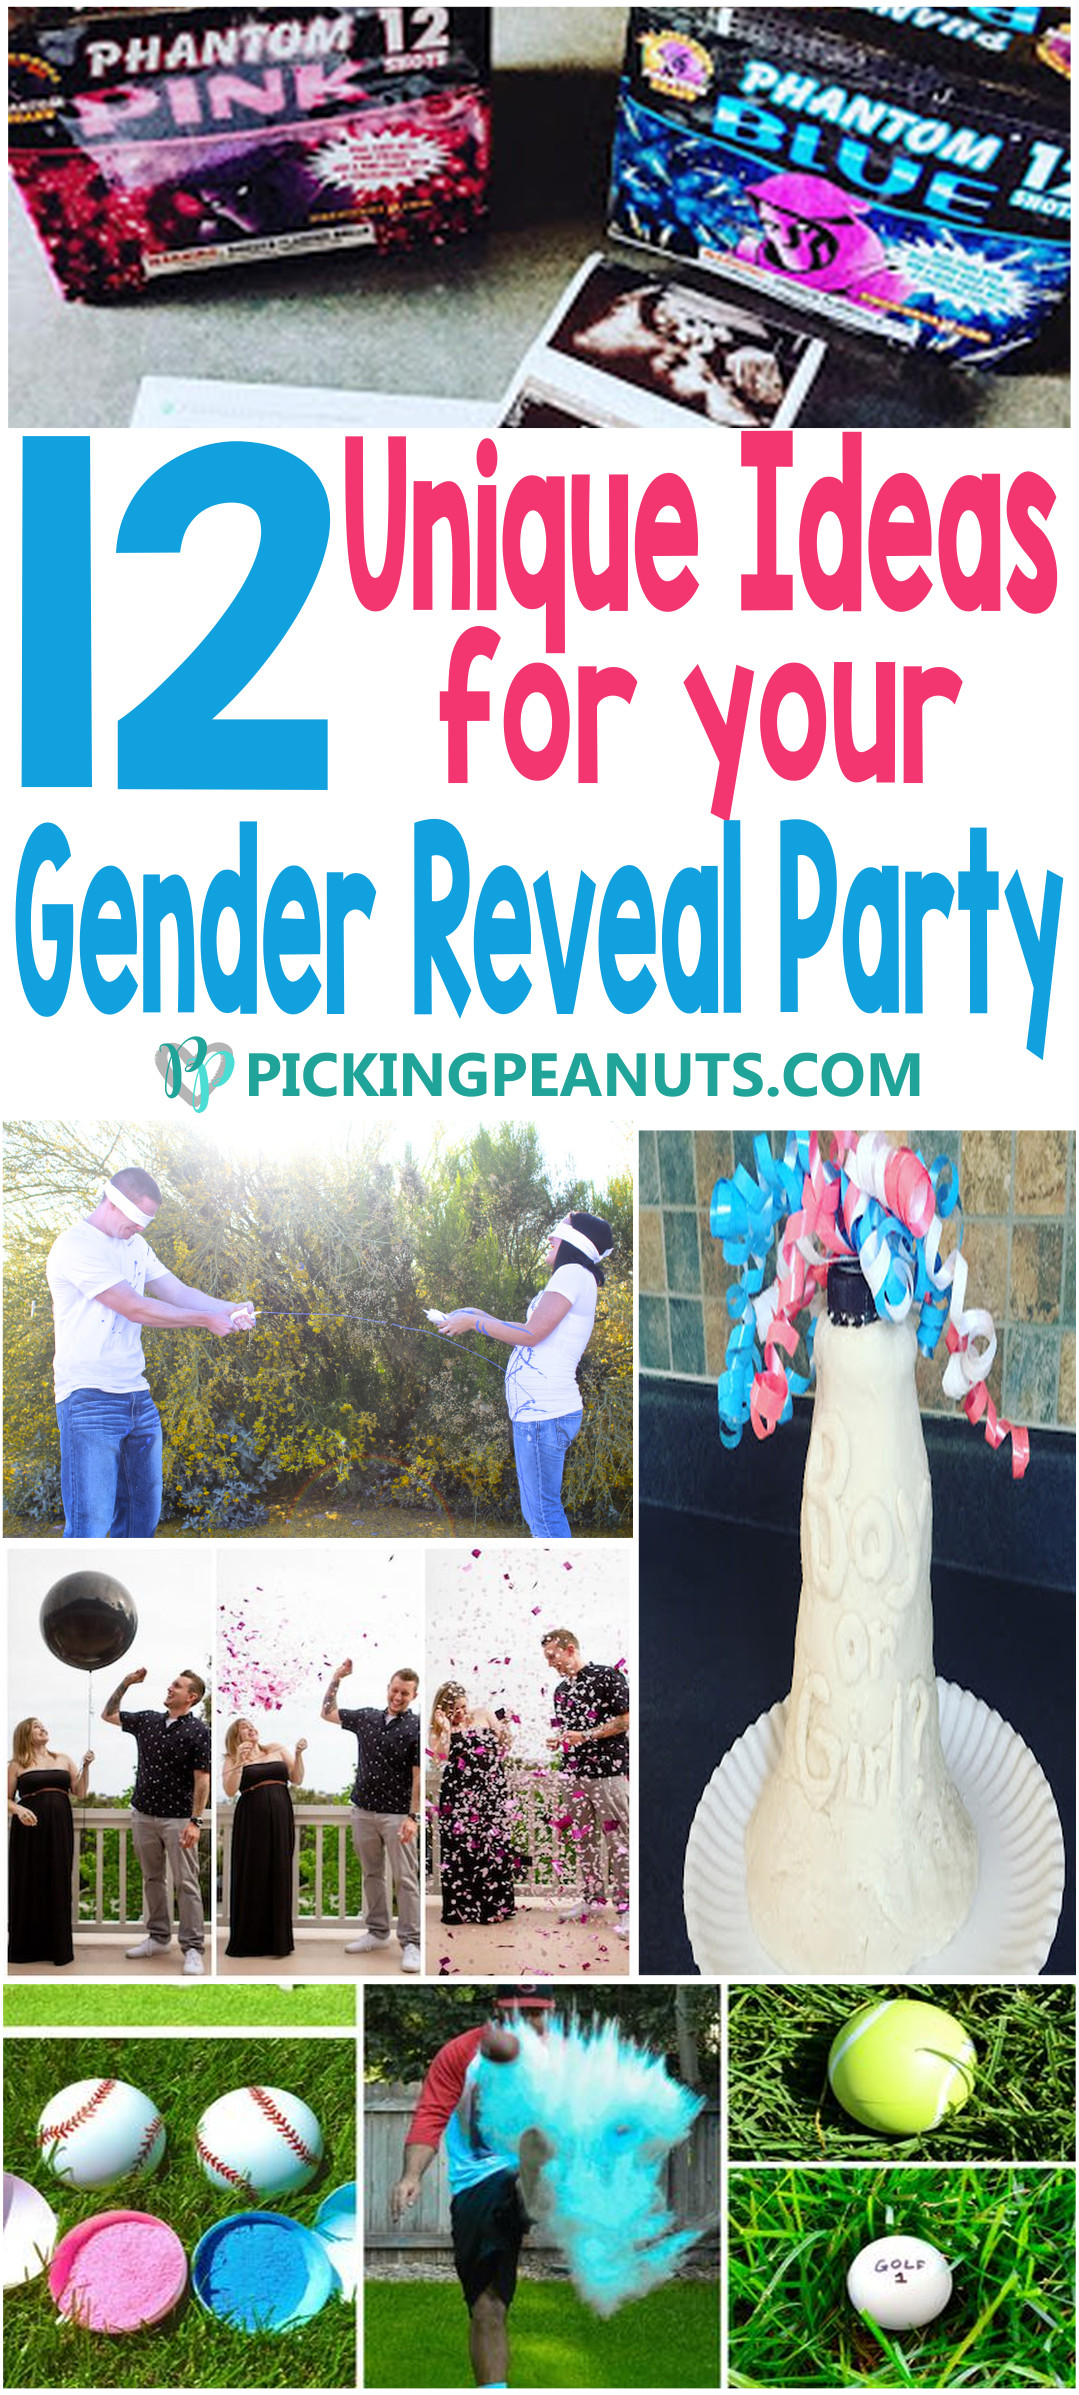 Cool Ideas For Gender Reveal Party
 12 Unique Gender Reveal Party Ideas PickingPeanuts